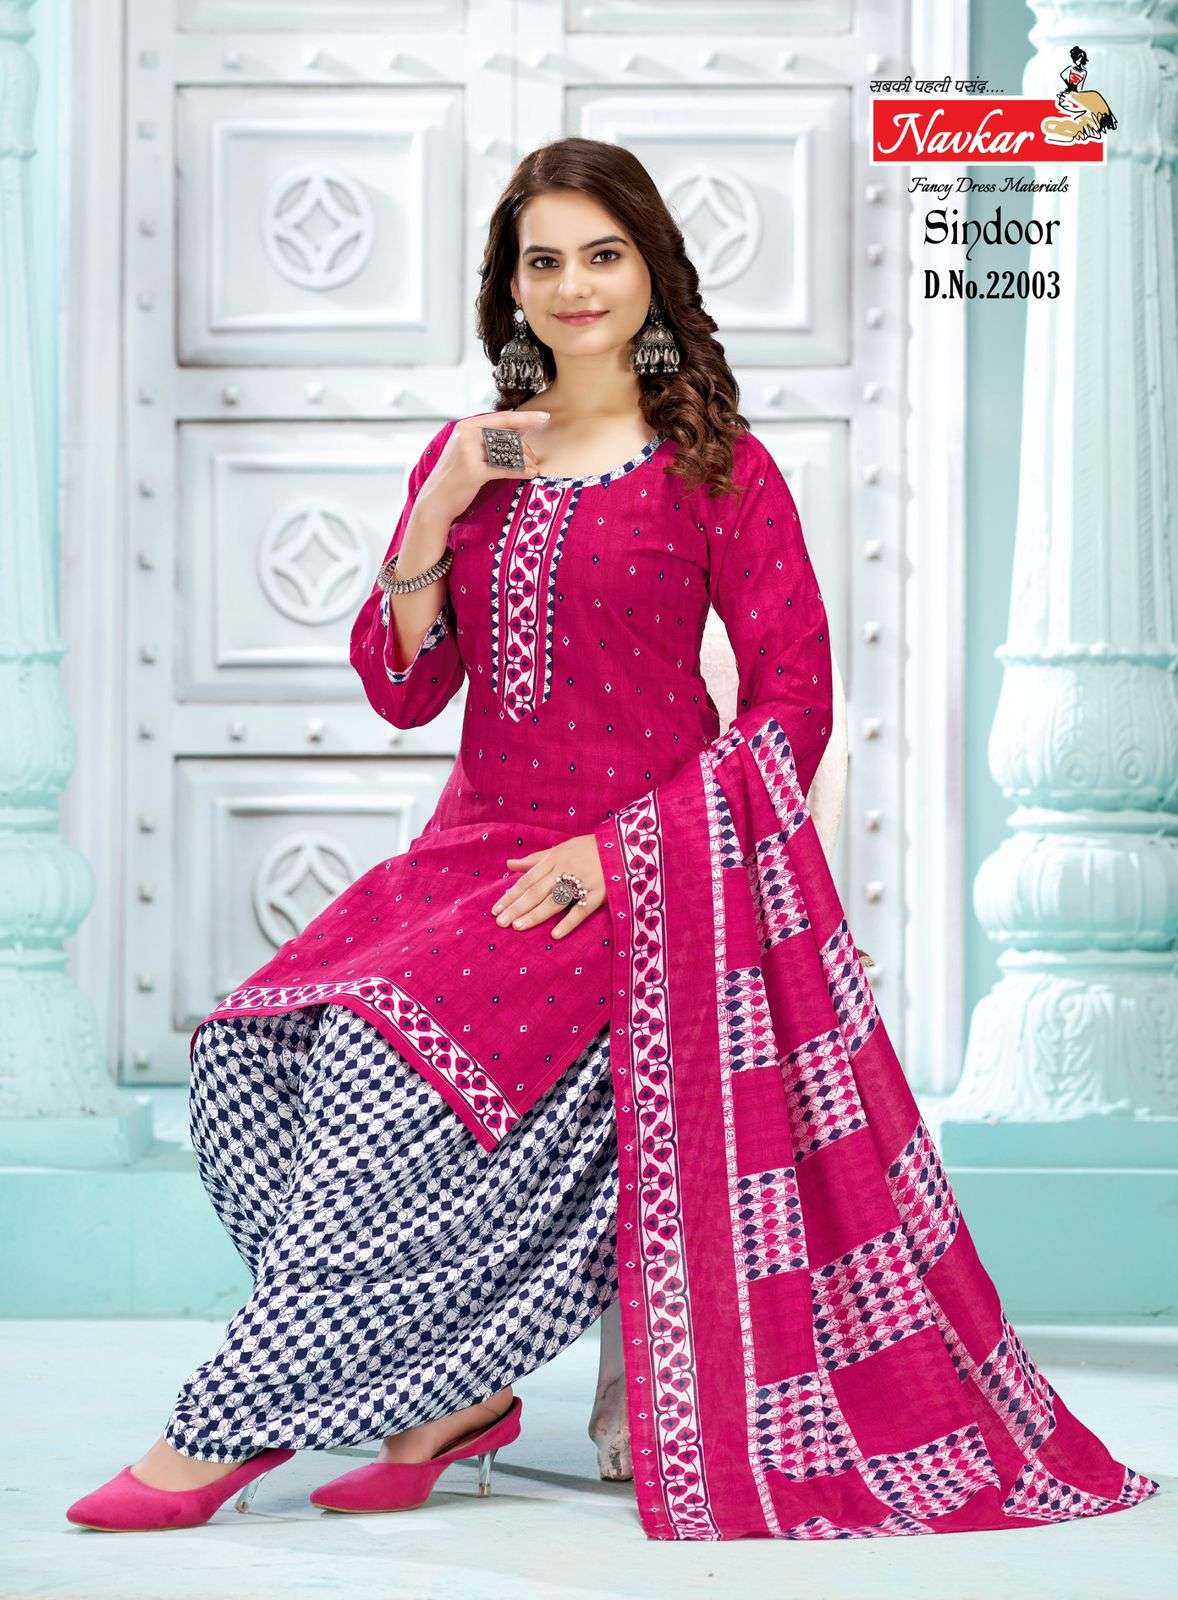 Buy Latest Designer Party Wear Pink Color Patiyala Suit | Fashion Clothing